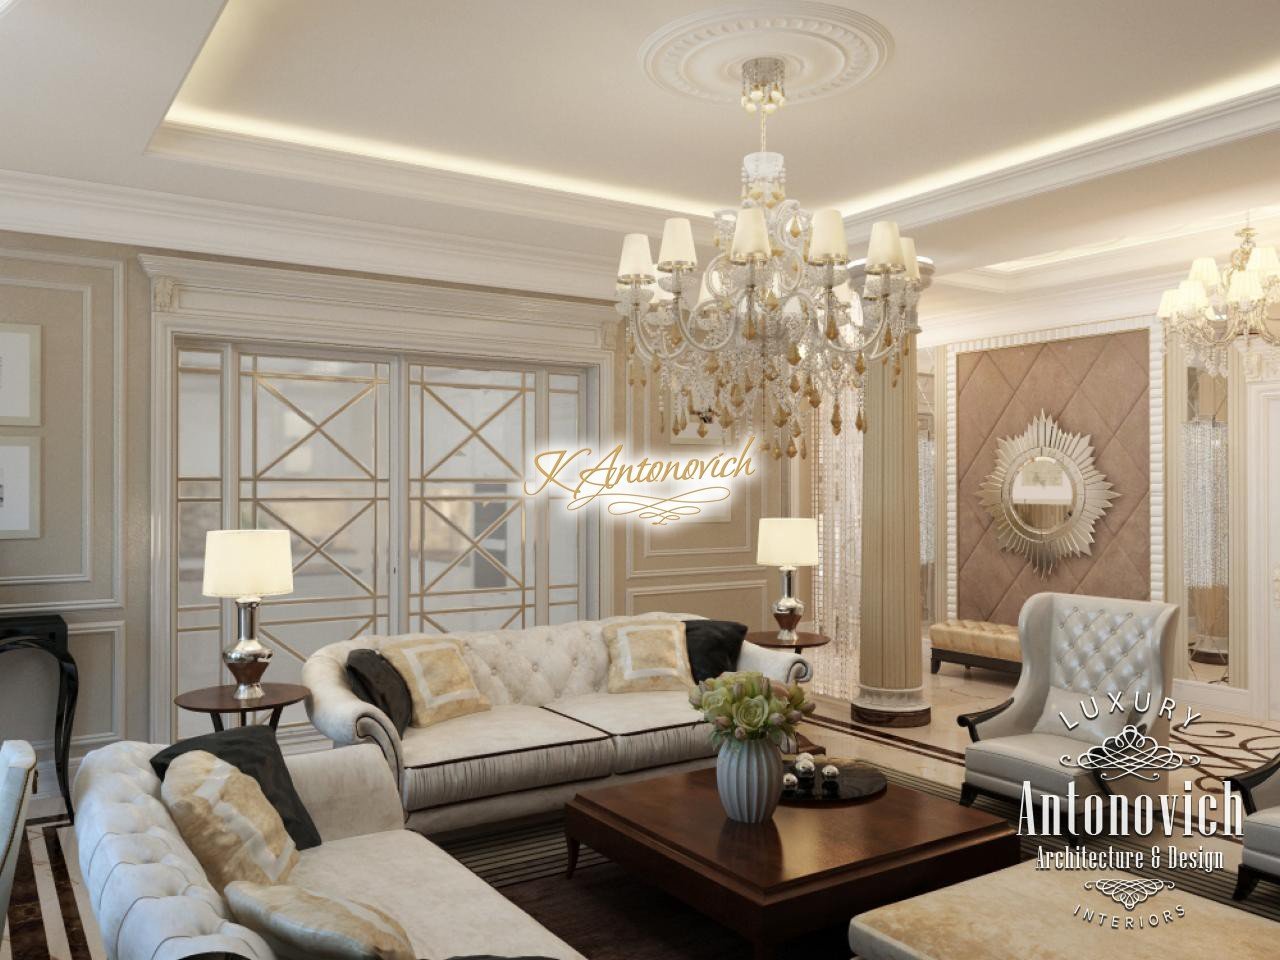 Apartment Design Dubai is in the Style of Neoclassicism